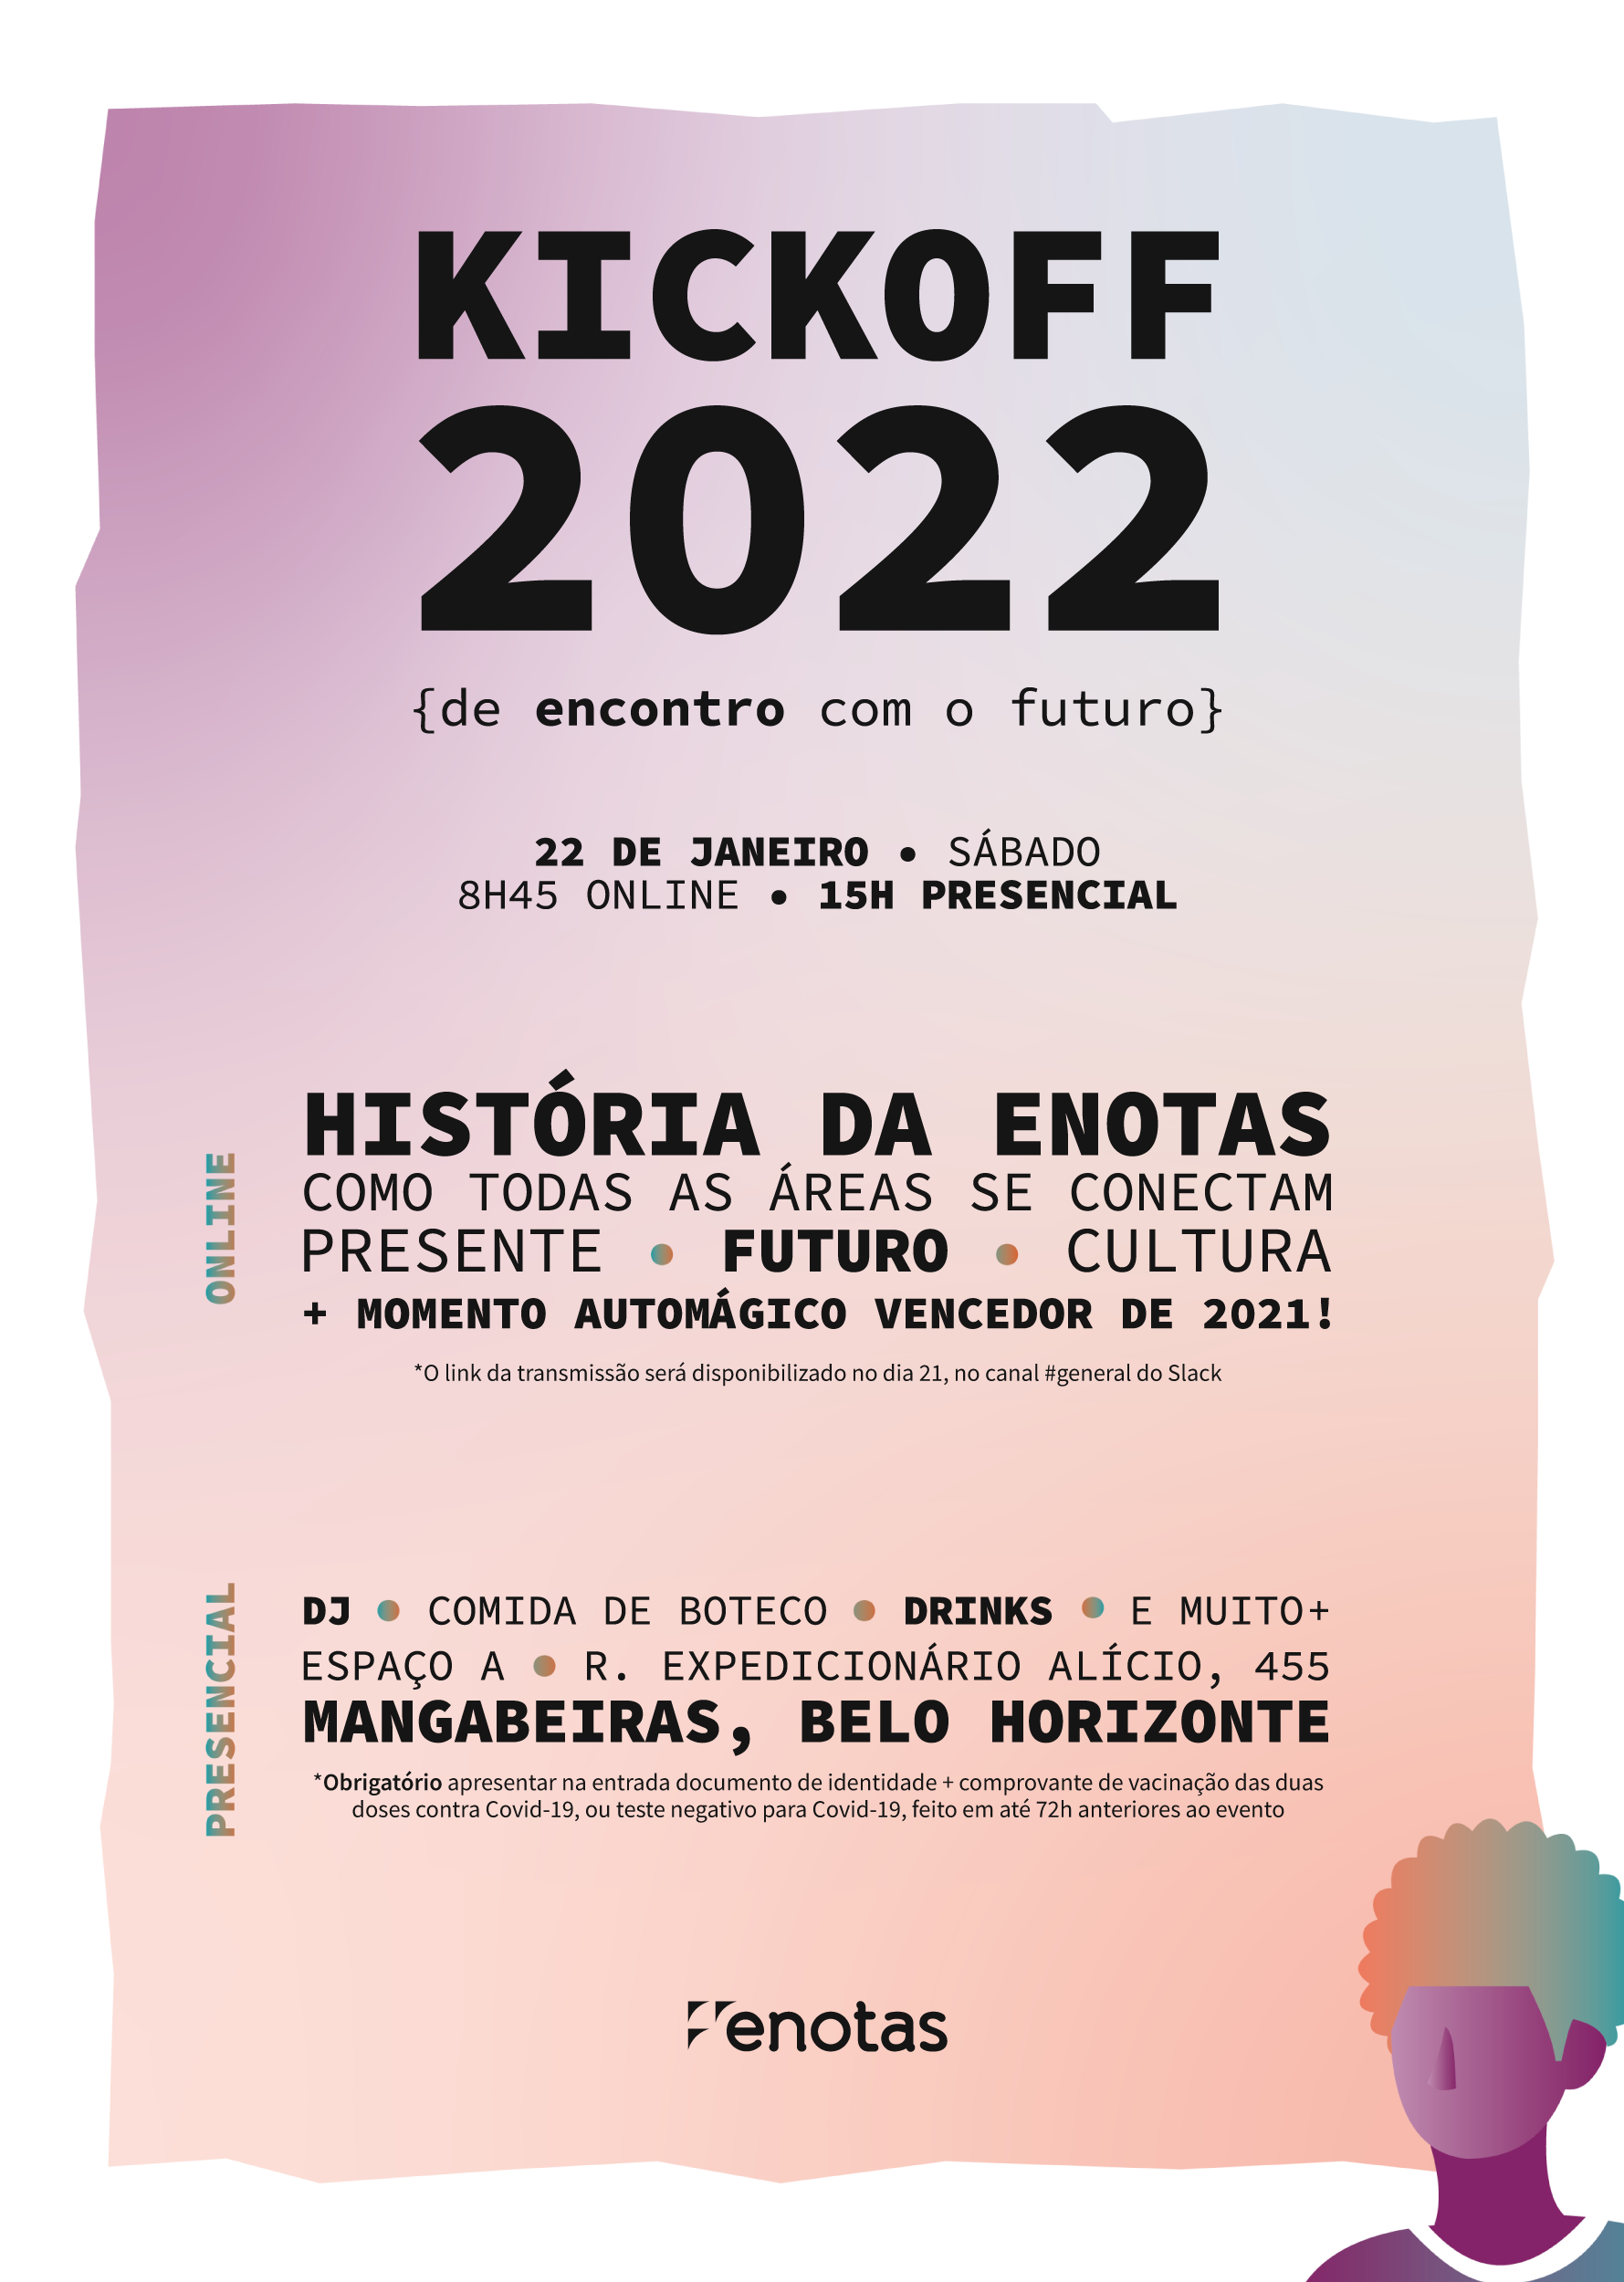 eNotas_KICKOFF_2022_Cronograma